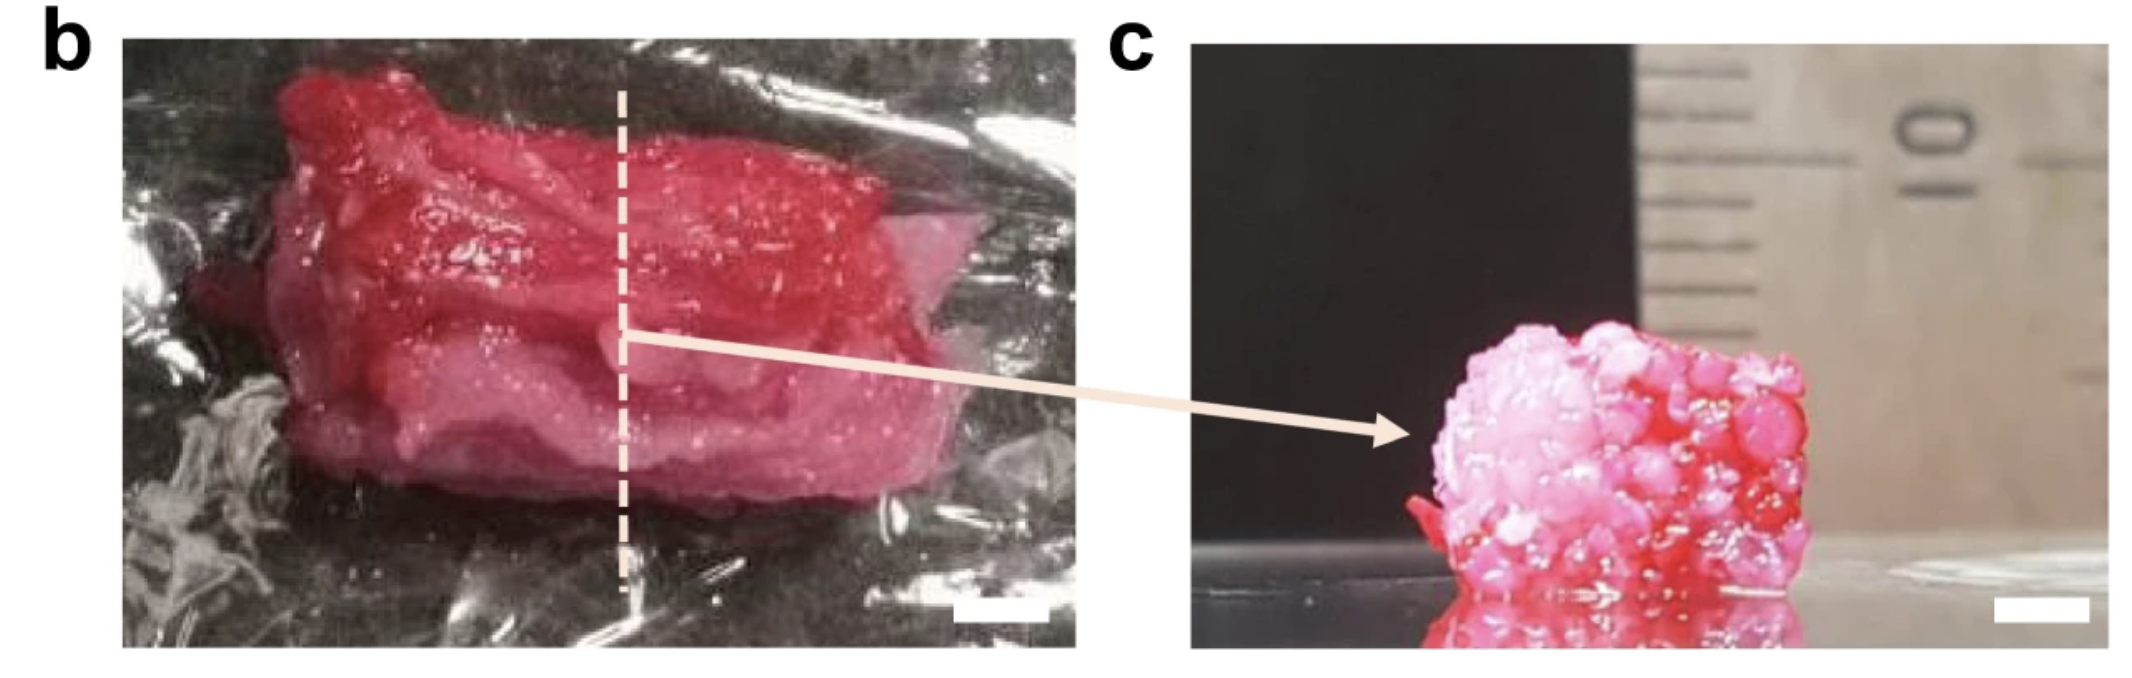 Osaka University researchers created cultured steak with bioprinting.